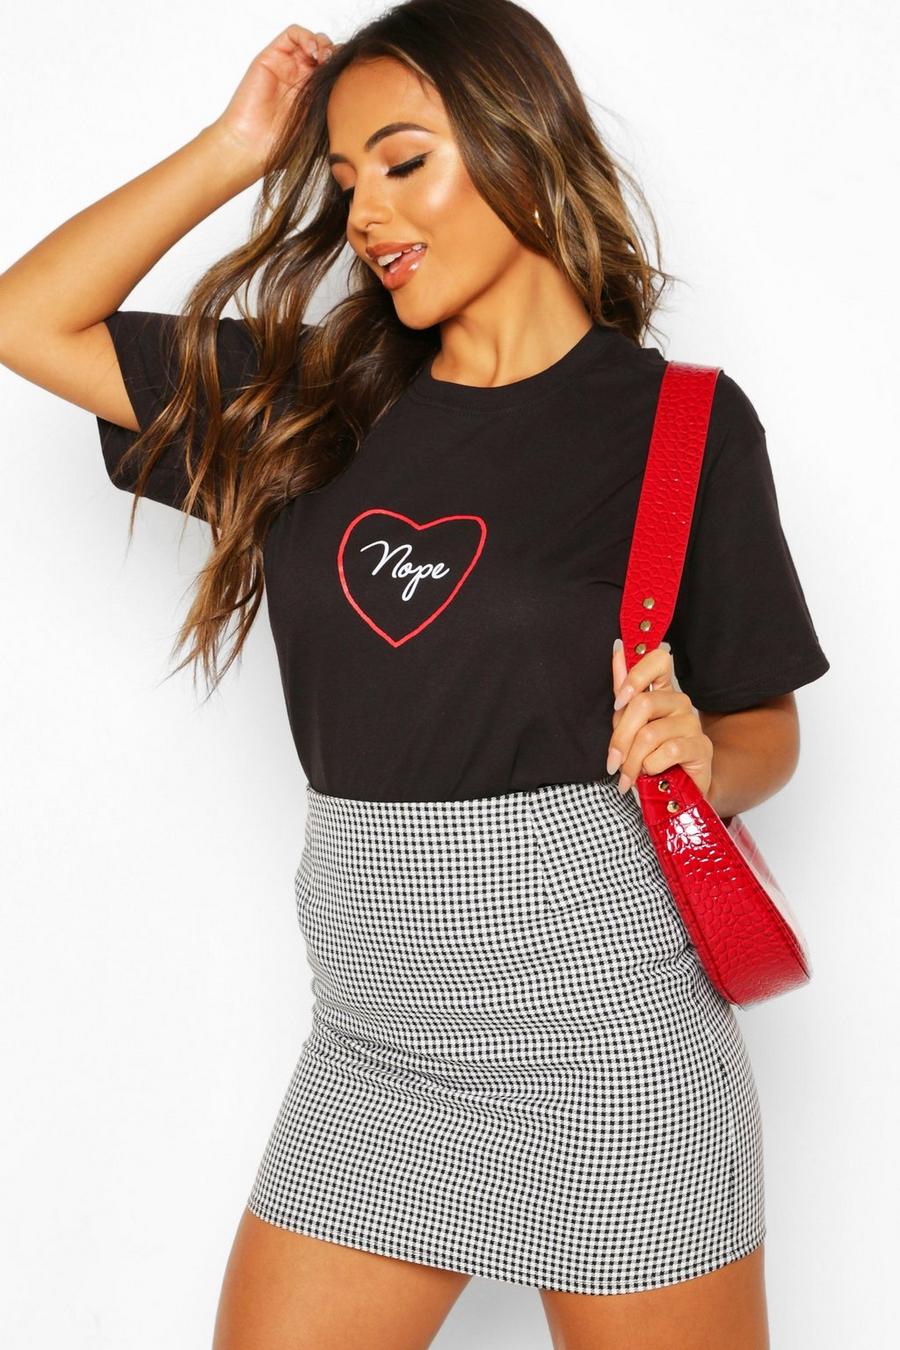 Petite Valentine 'Nope' Heart Slogan T-Shirt image number 1